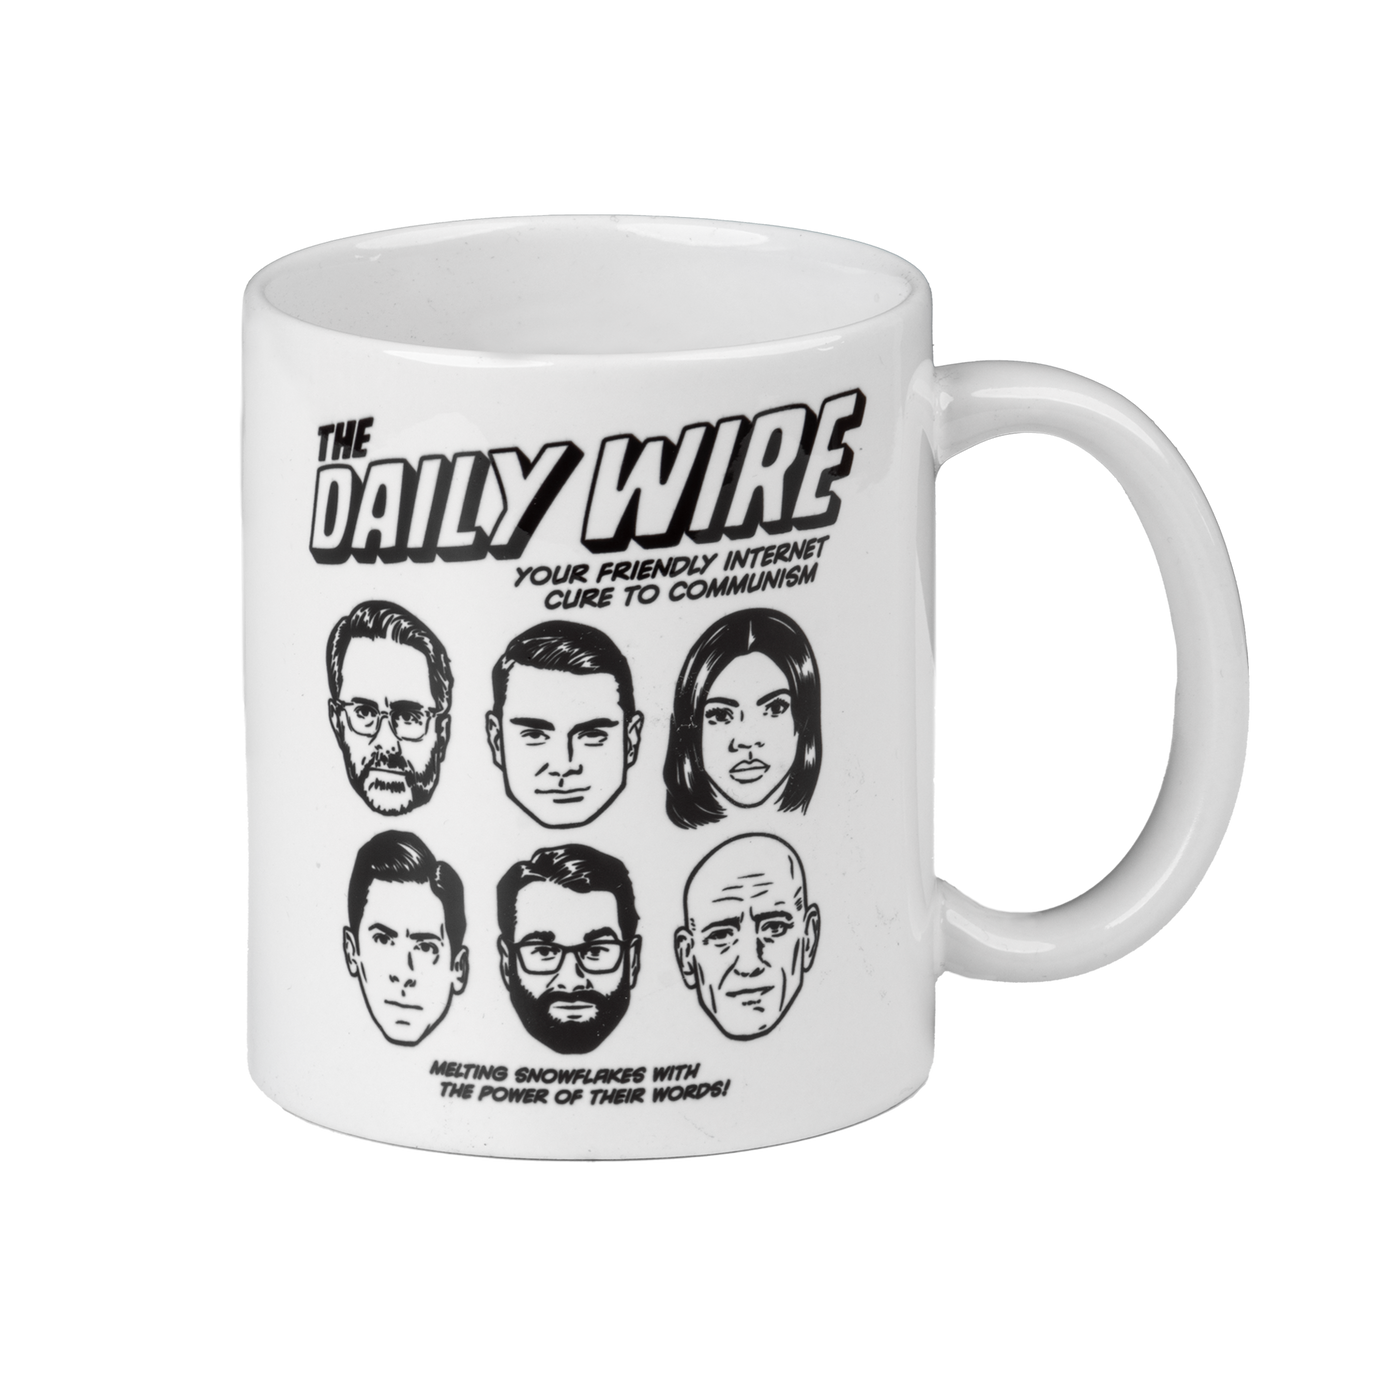 The Daily Wire Mug